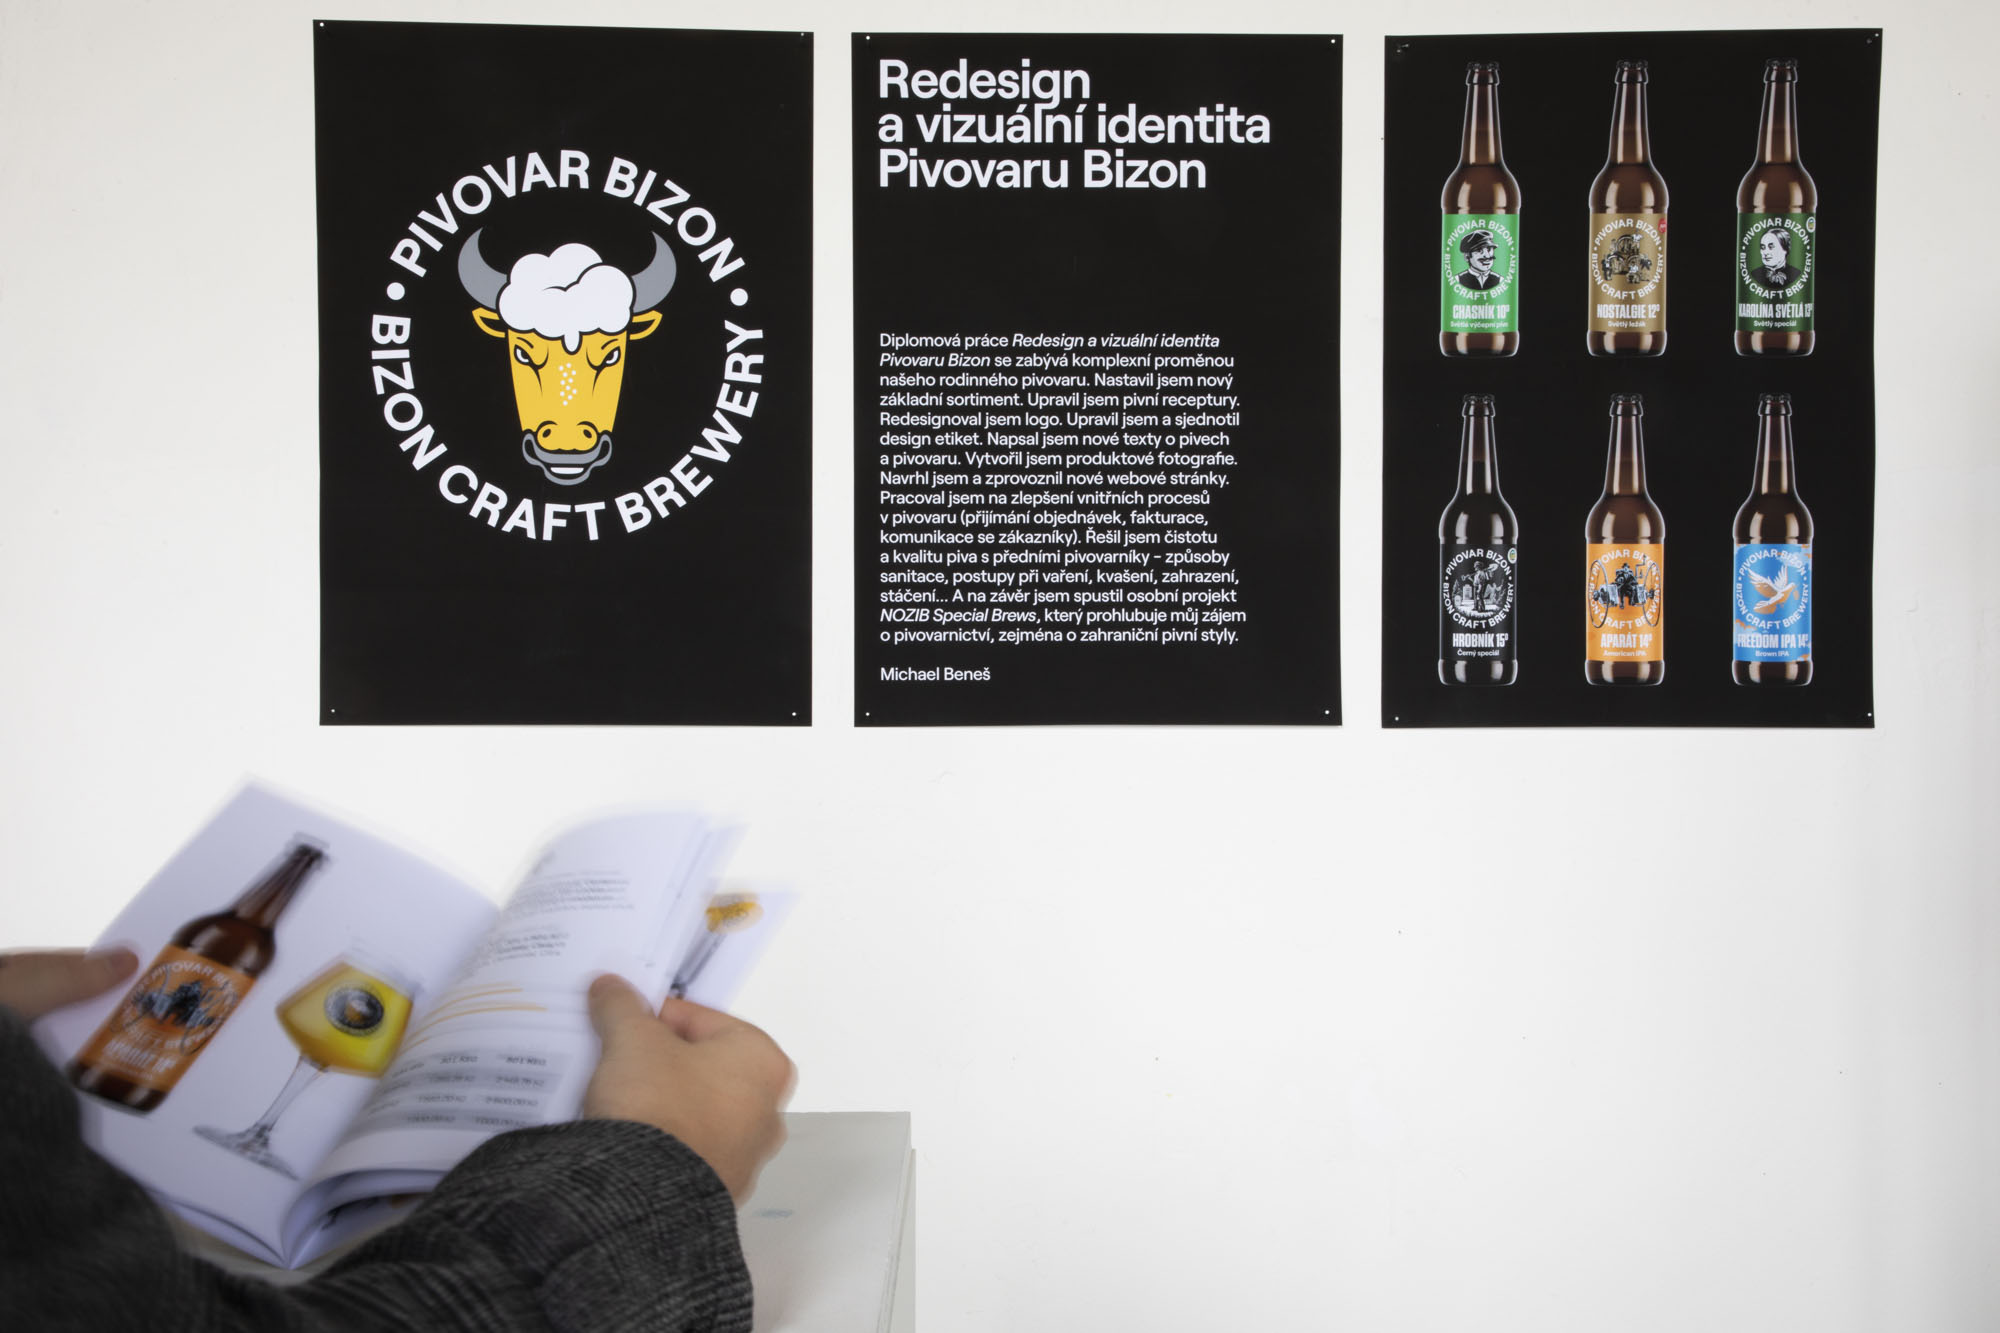 Redesign a vizuální identita Pivovaru Bizon